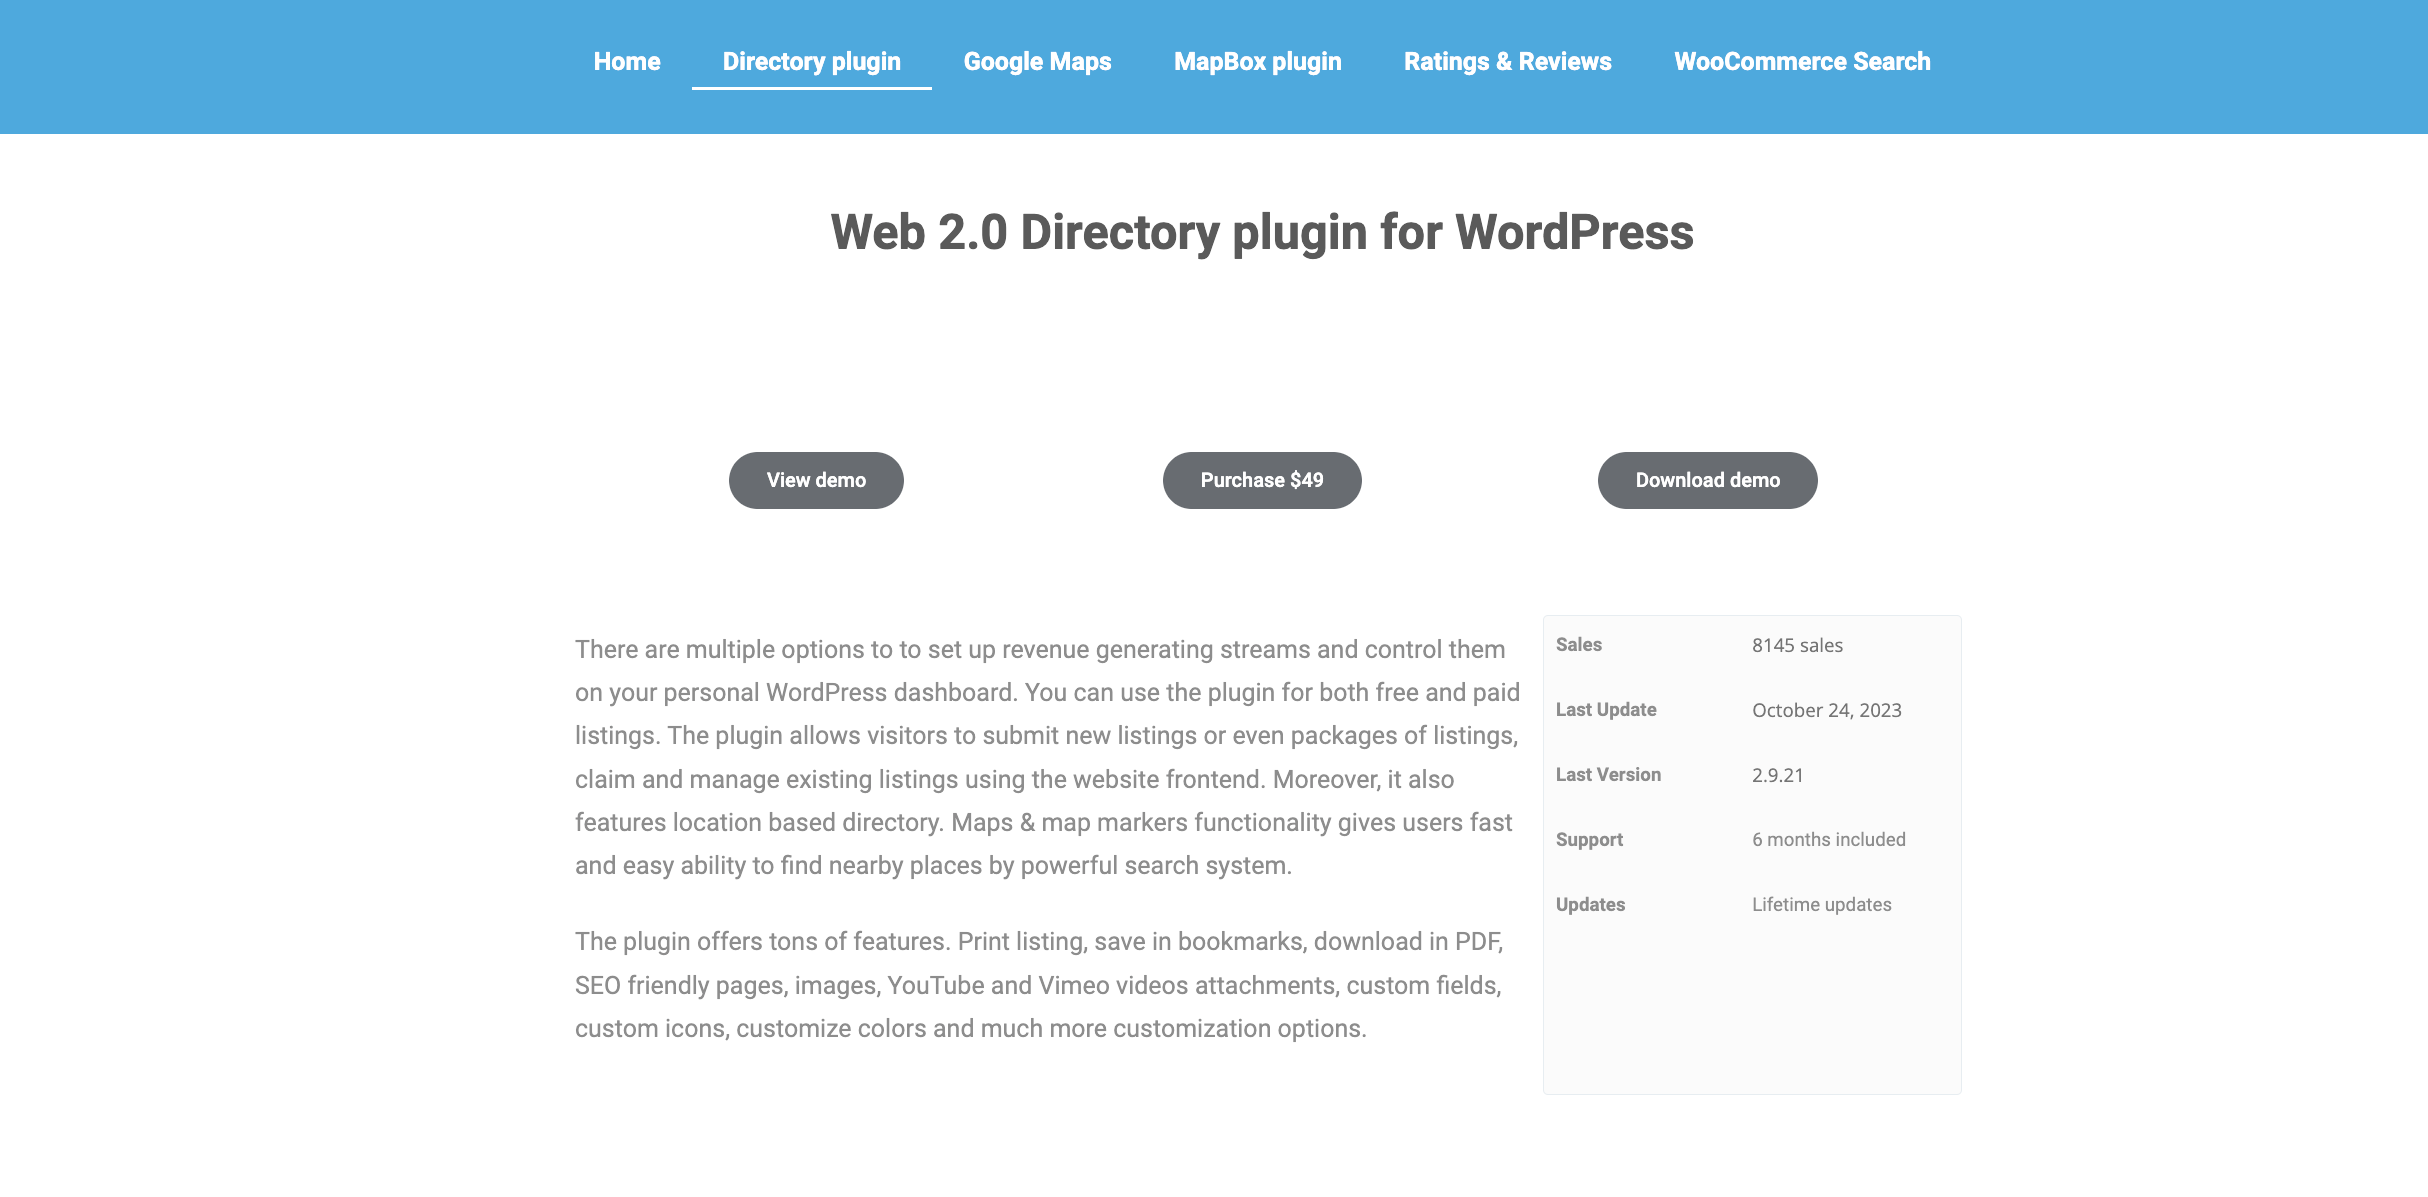 Web 2.0 Directory Plugin